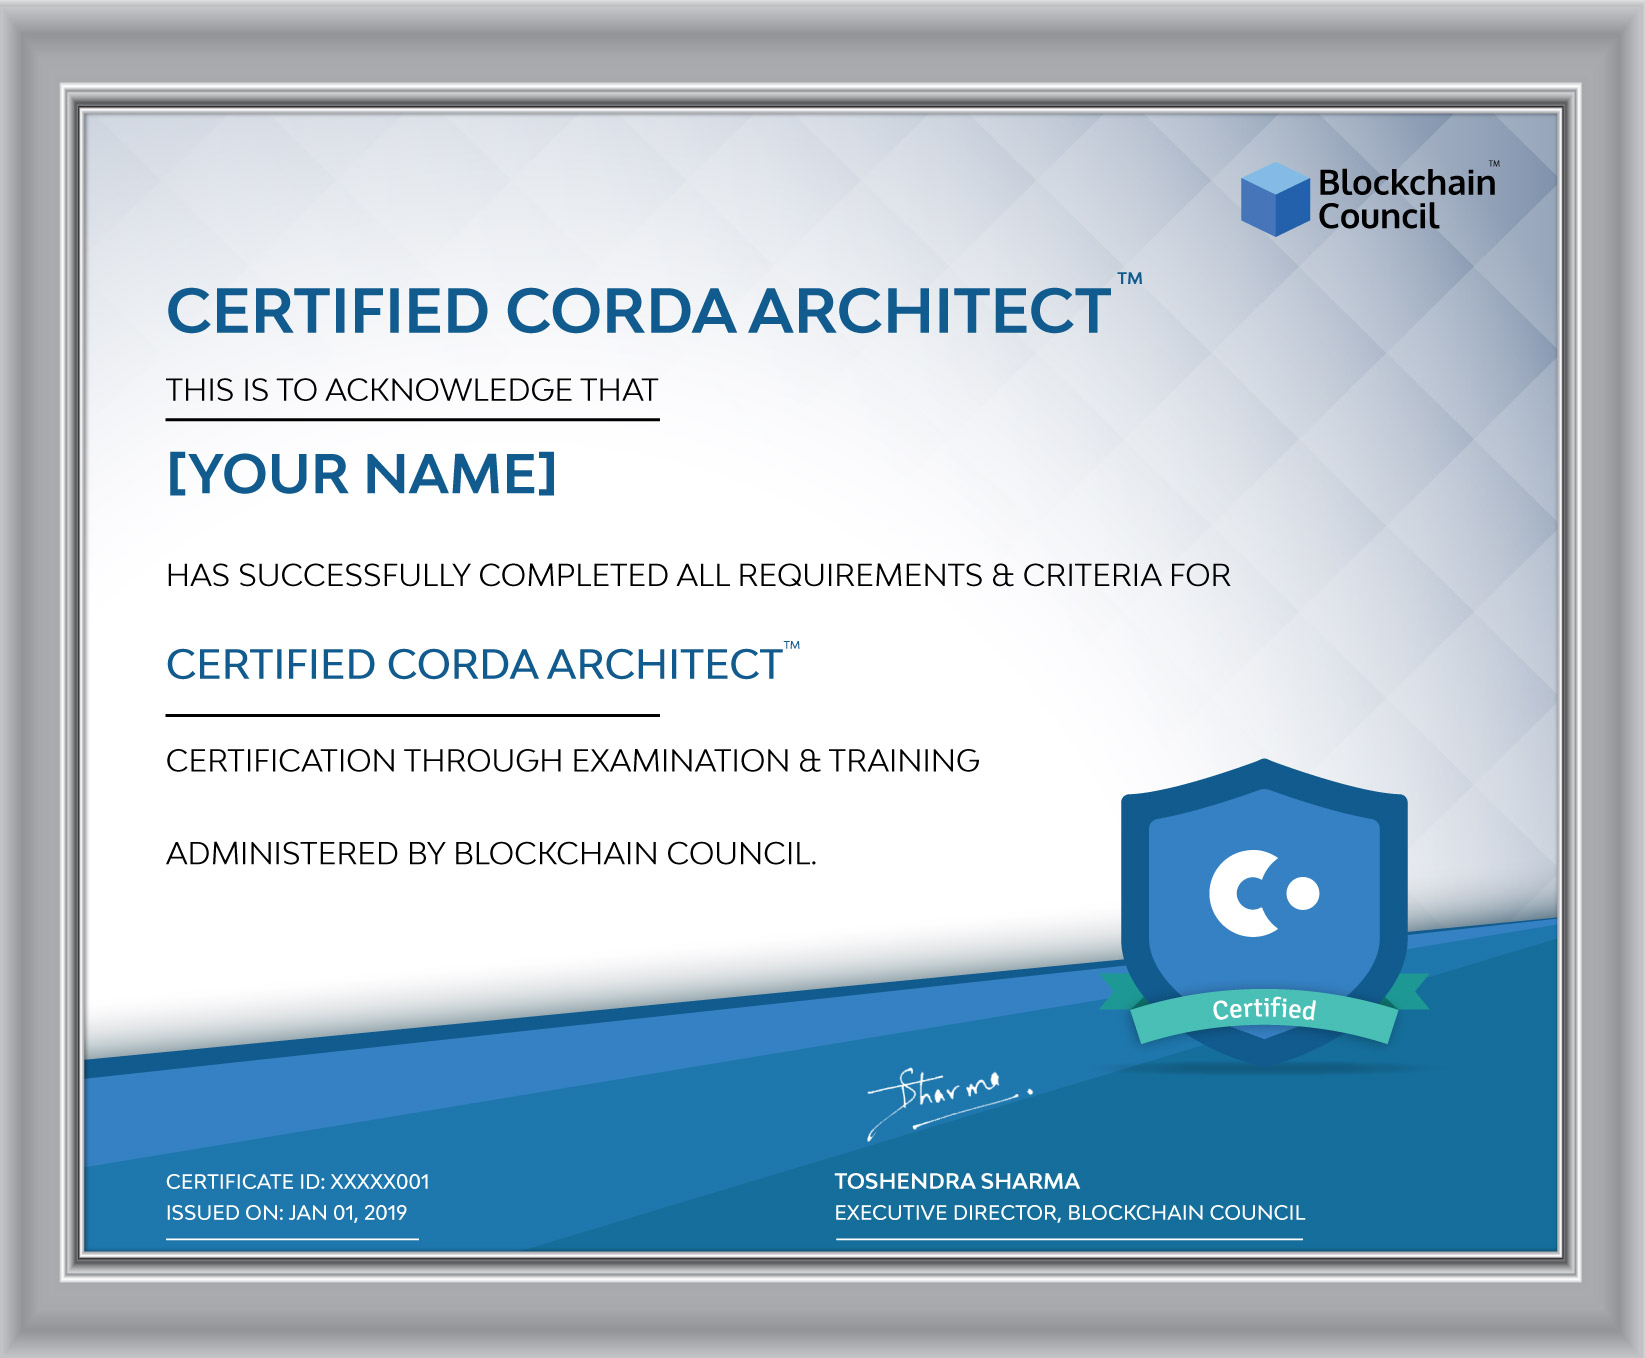 Certified Corda Architect™ (CCA)